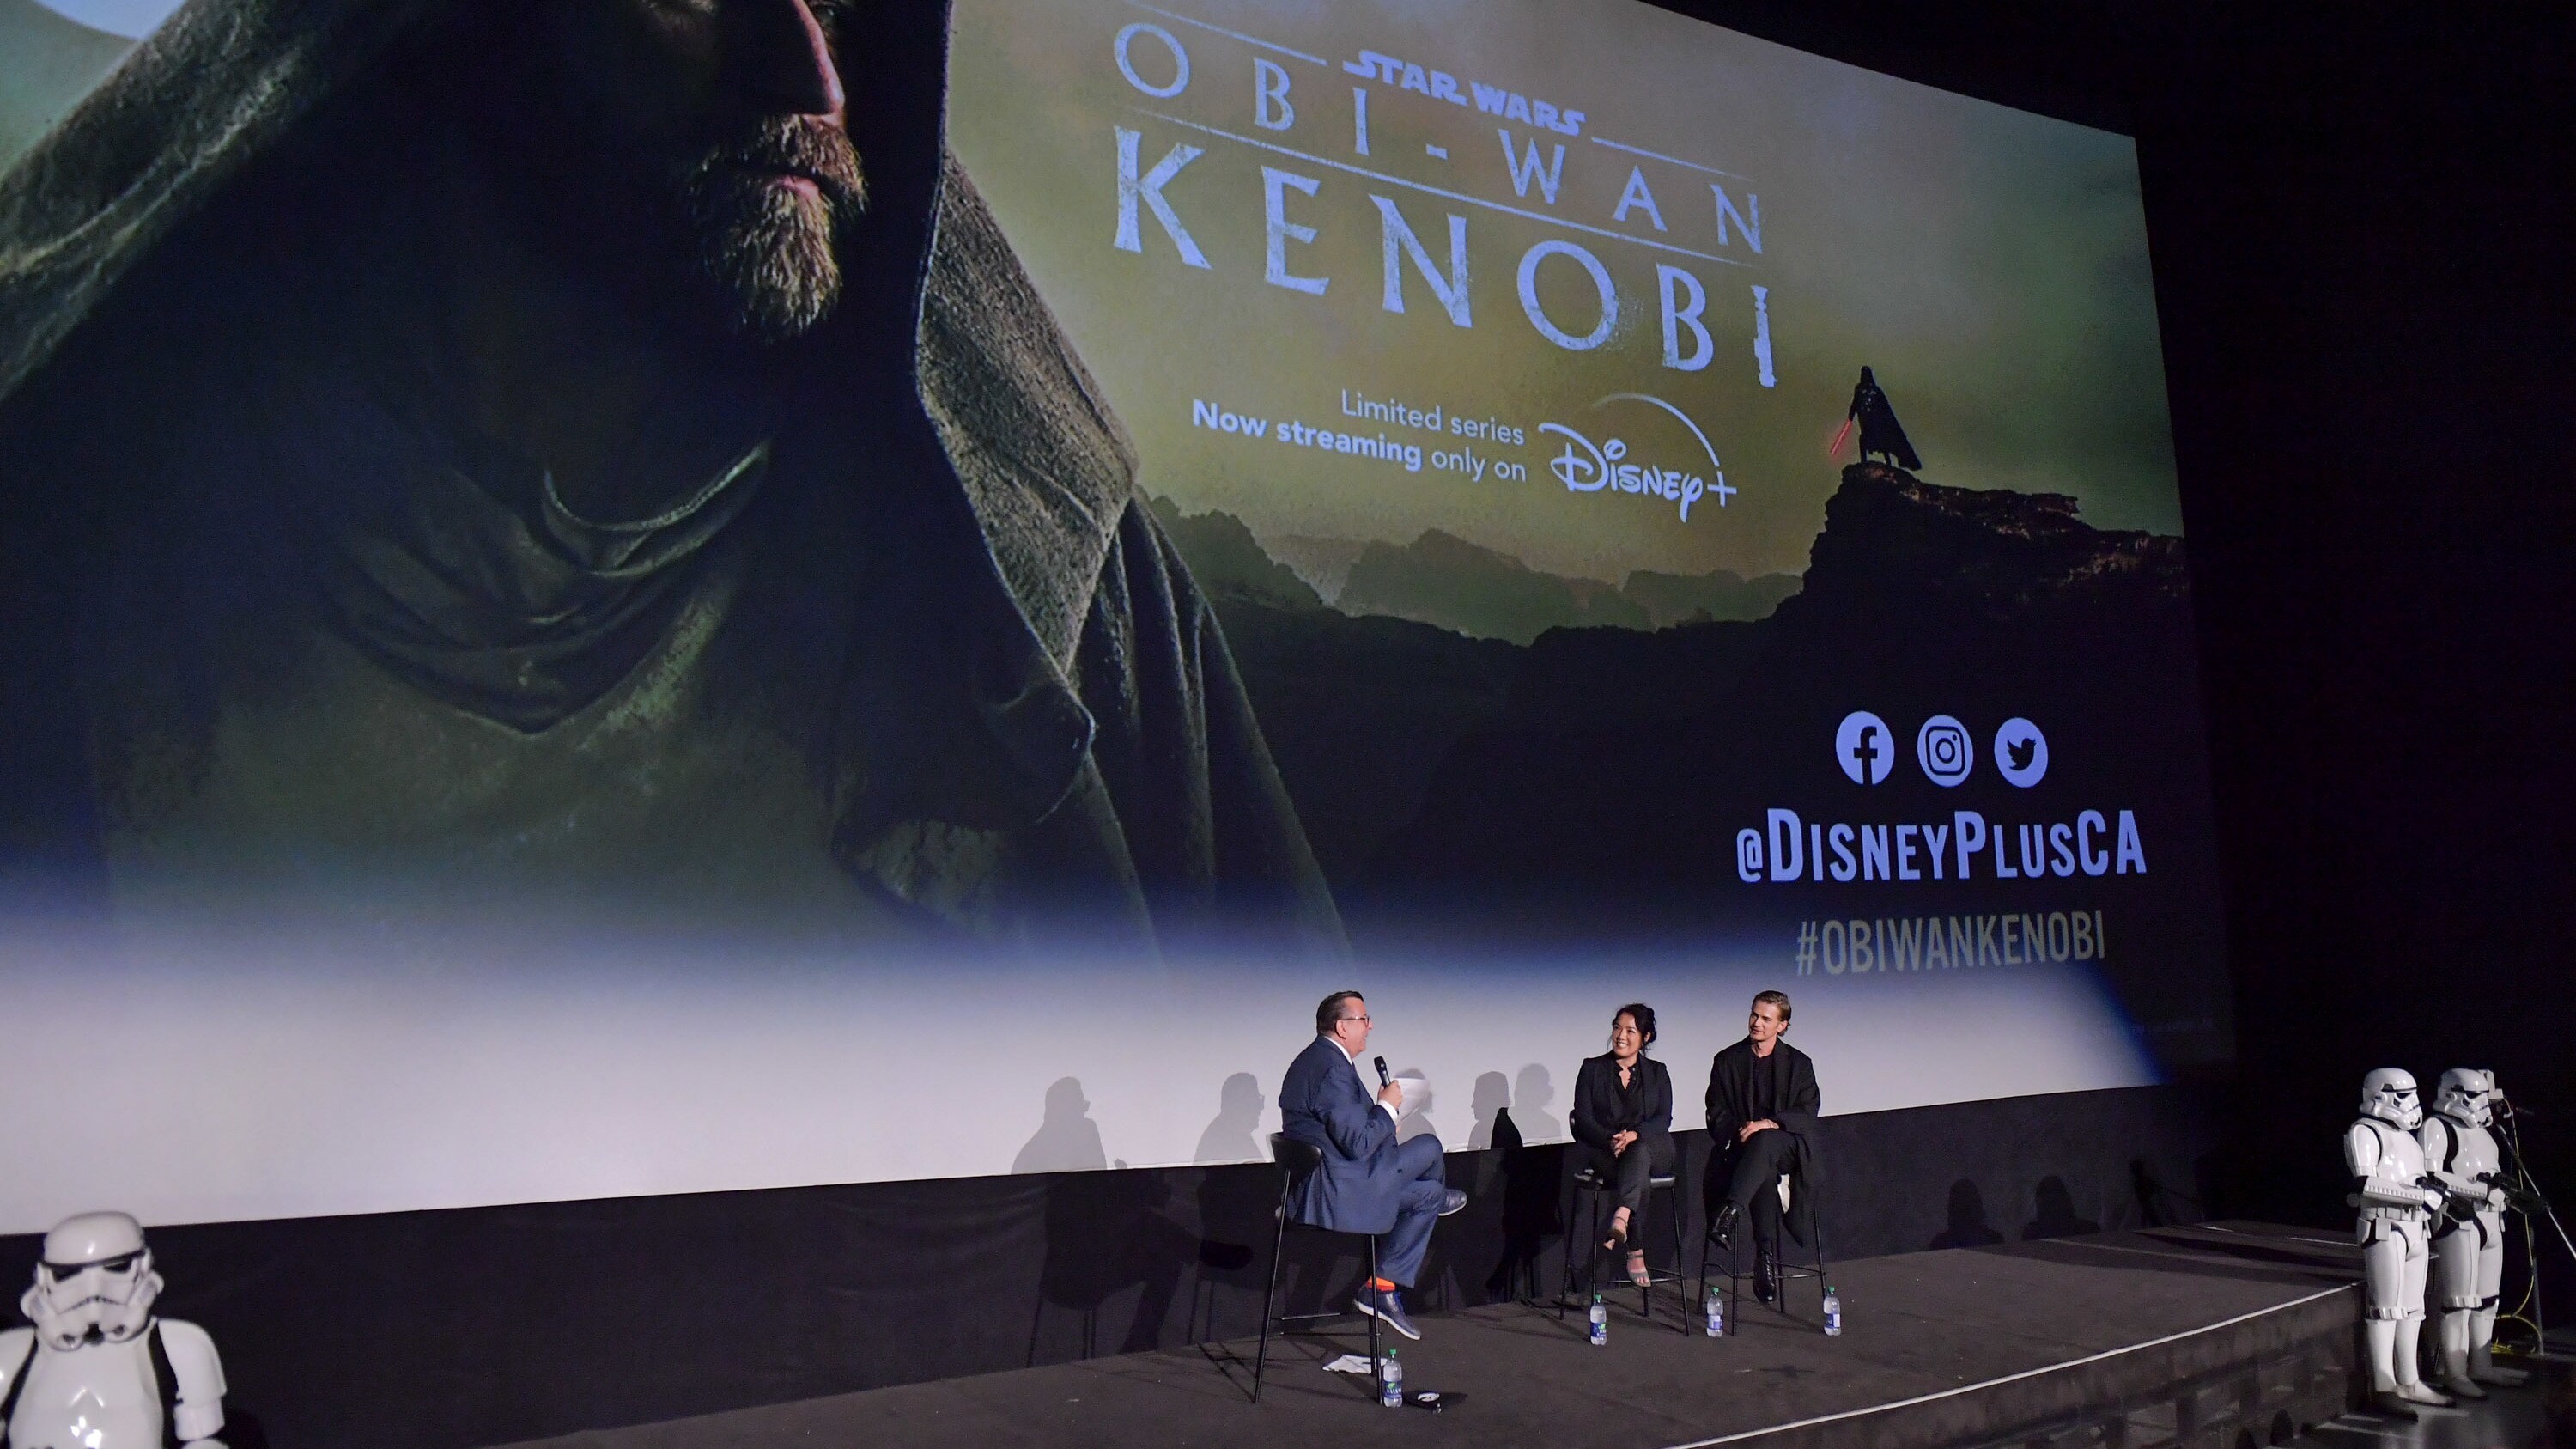 Disney+ Releases Photos From “Obi-Wan Kenobi” Marathon And Finale Screening In Toronto